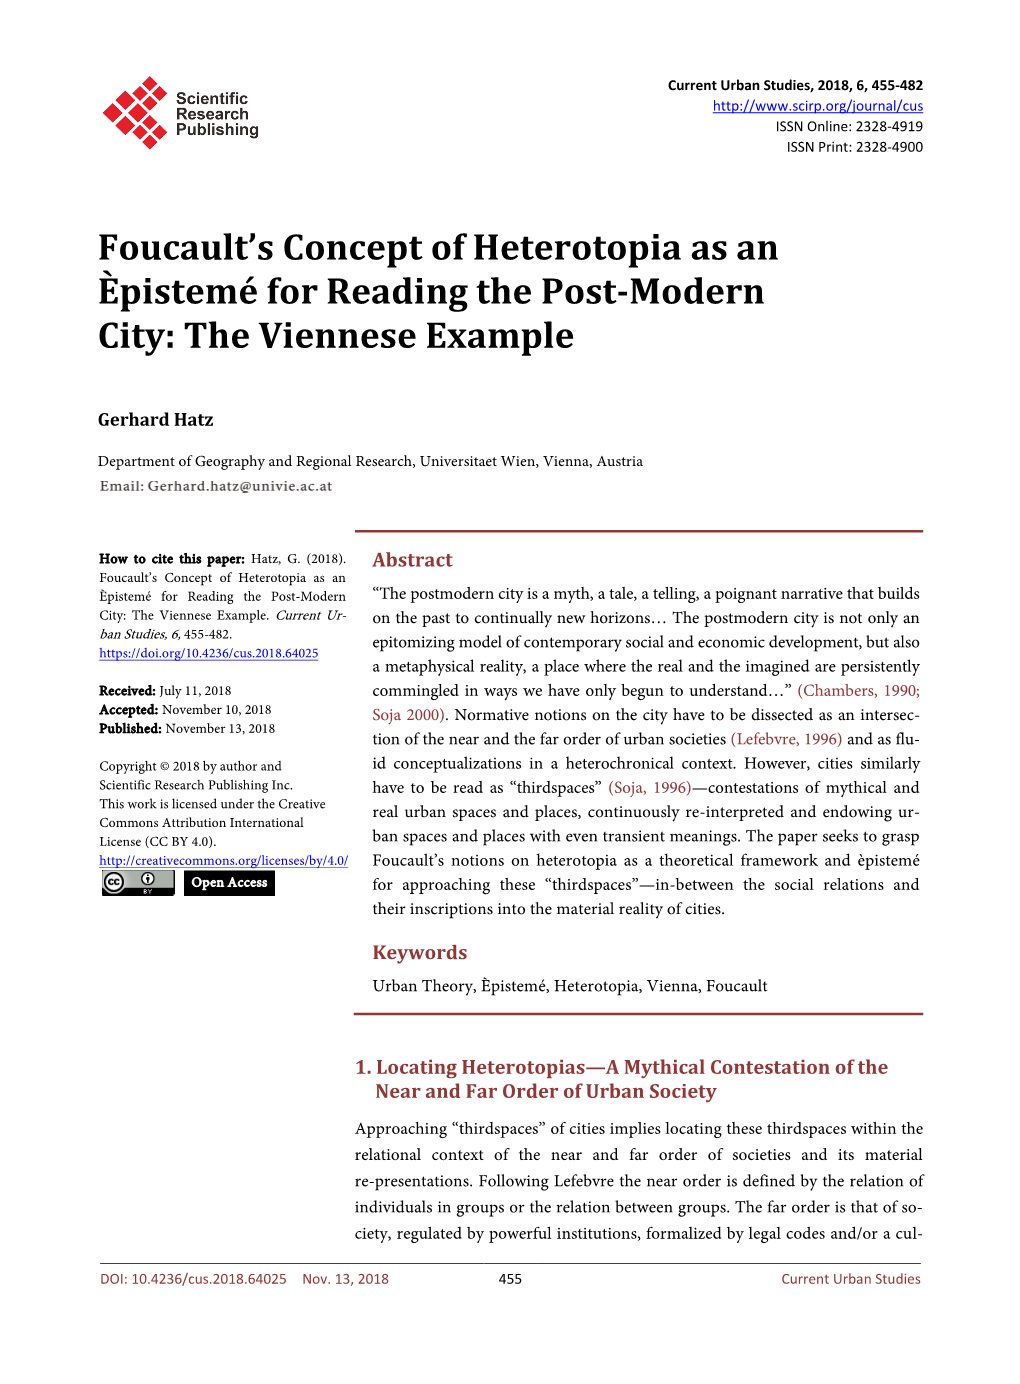 Foucault's Concept of Heterotopia As An